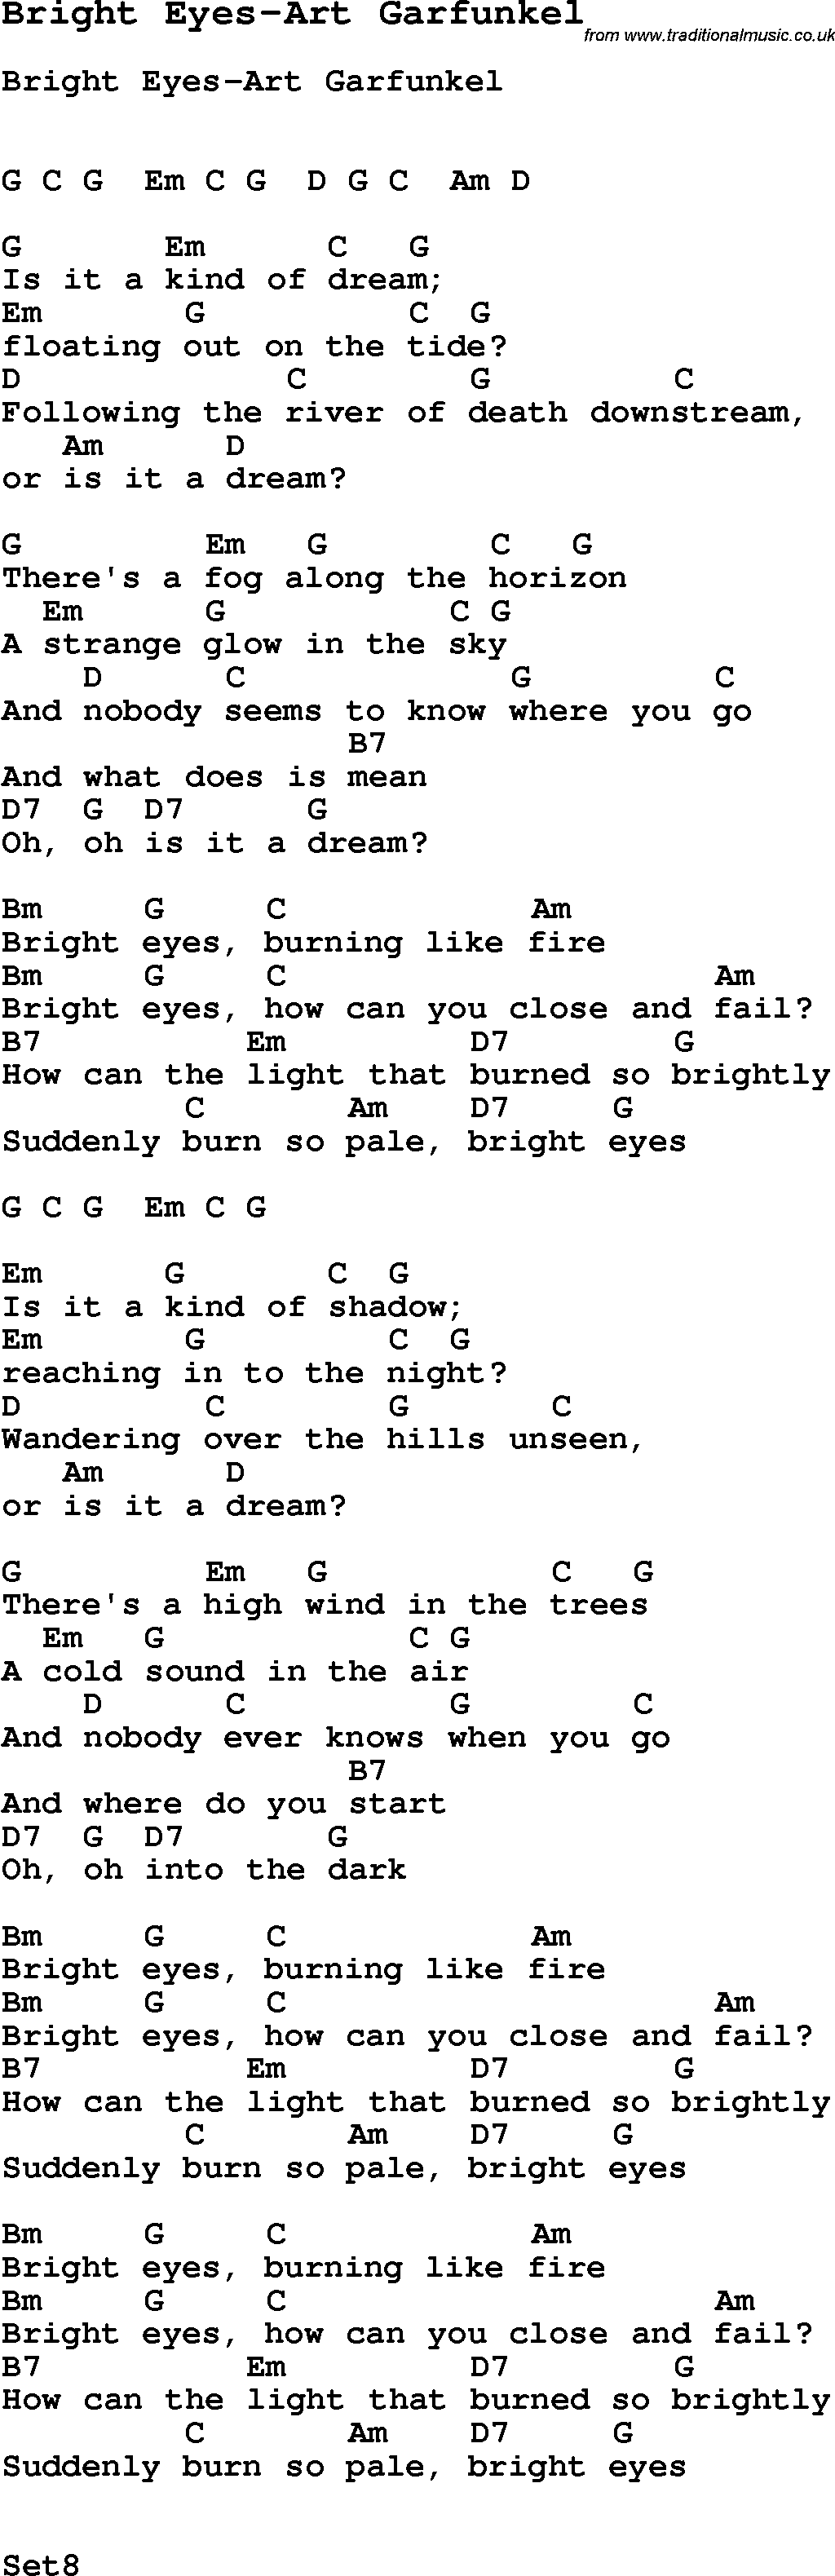 Song Bright Eyes-Art Garfunkel, with lyrics for vocal performance and accompaniment chords for Ukulele, Guitar Banjo etc.